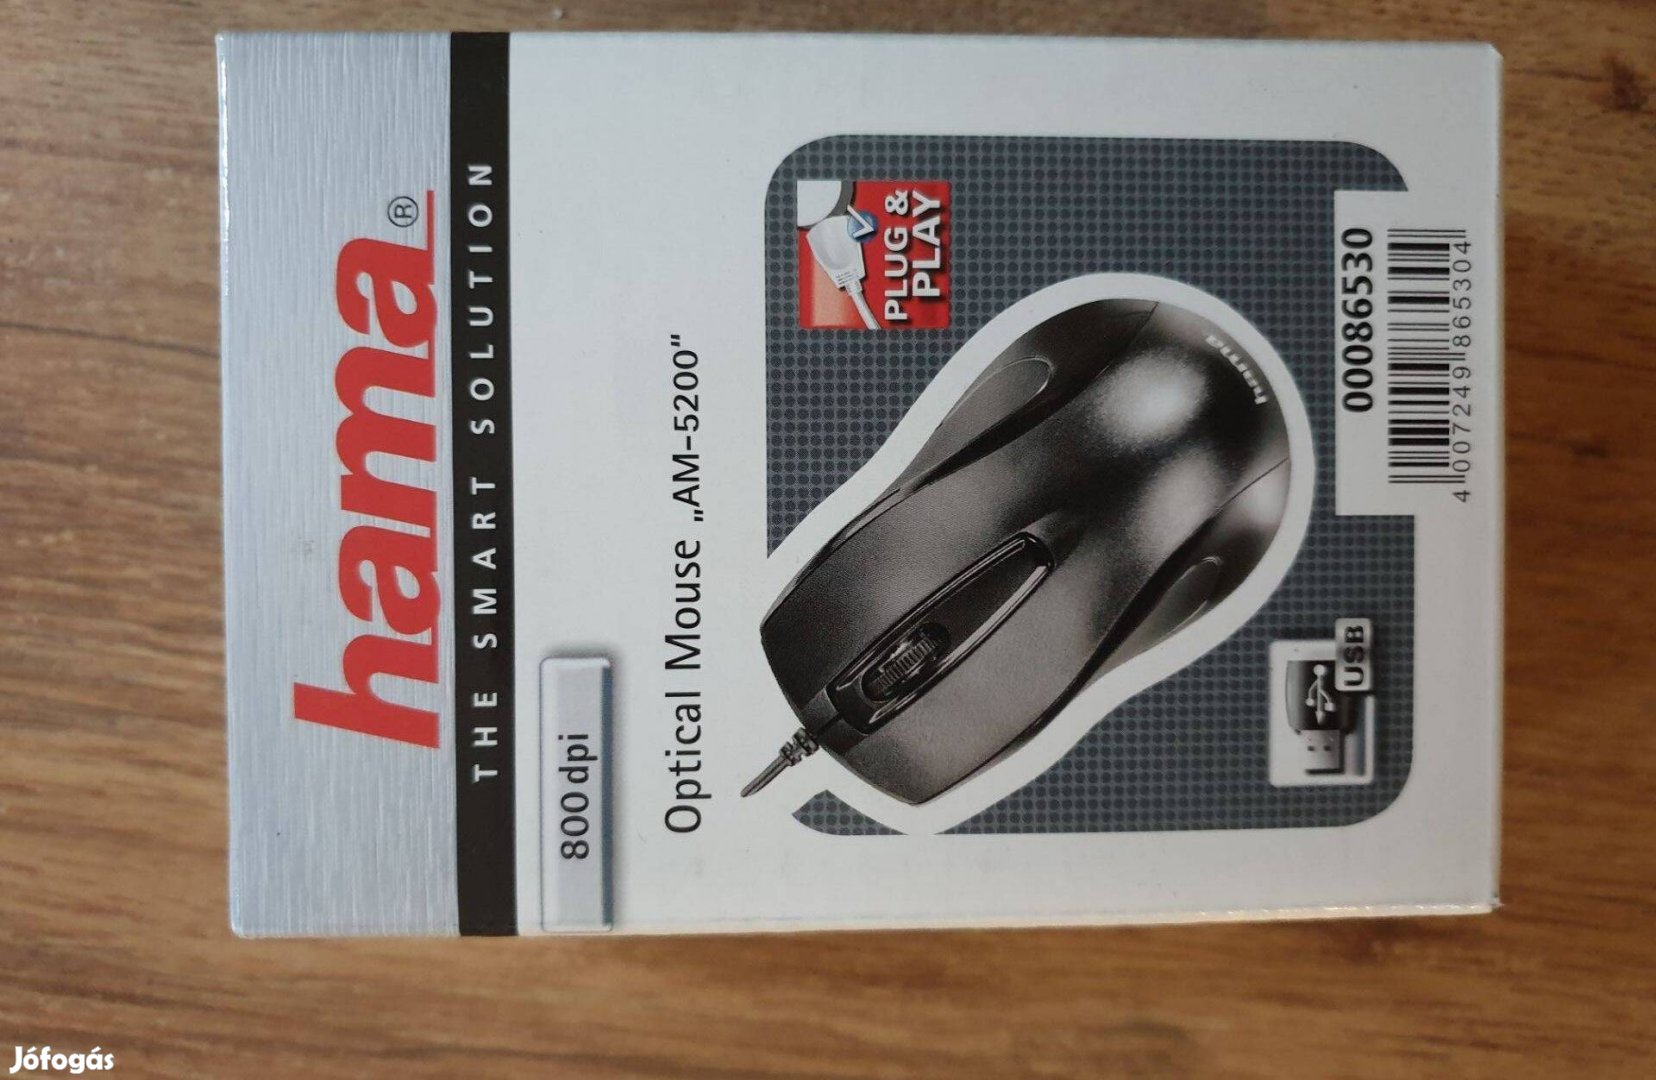 Teljesen új Hama AM-5200 USB egér áron alul